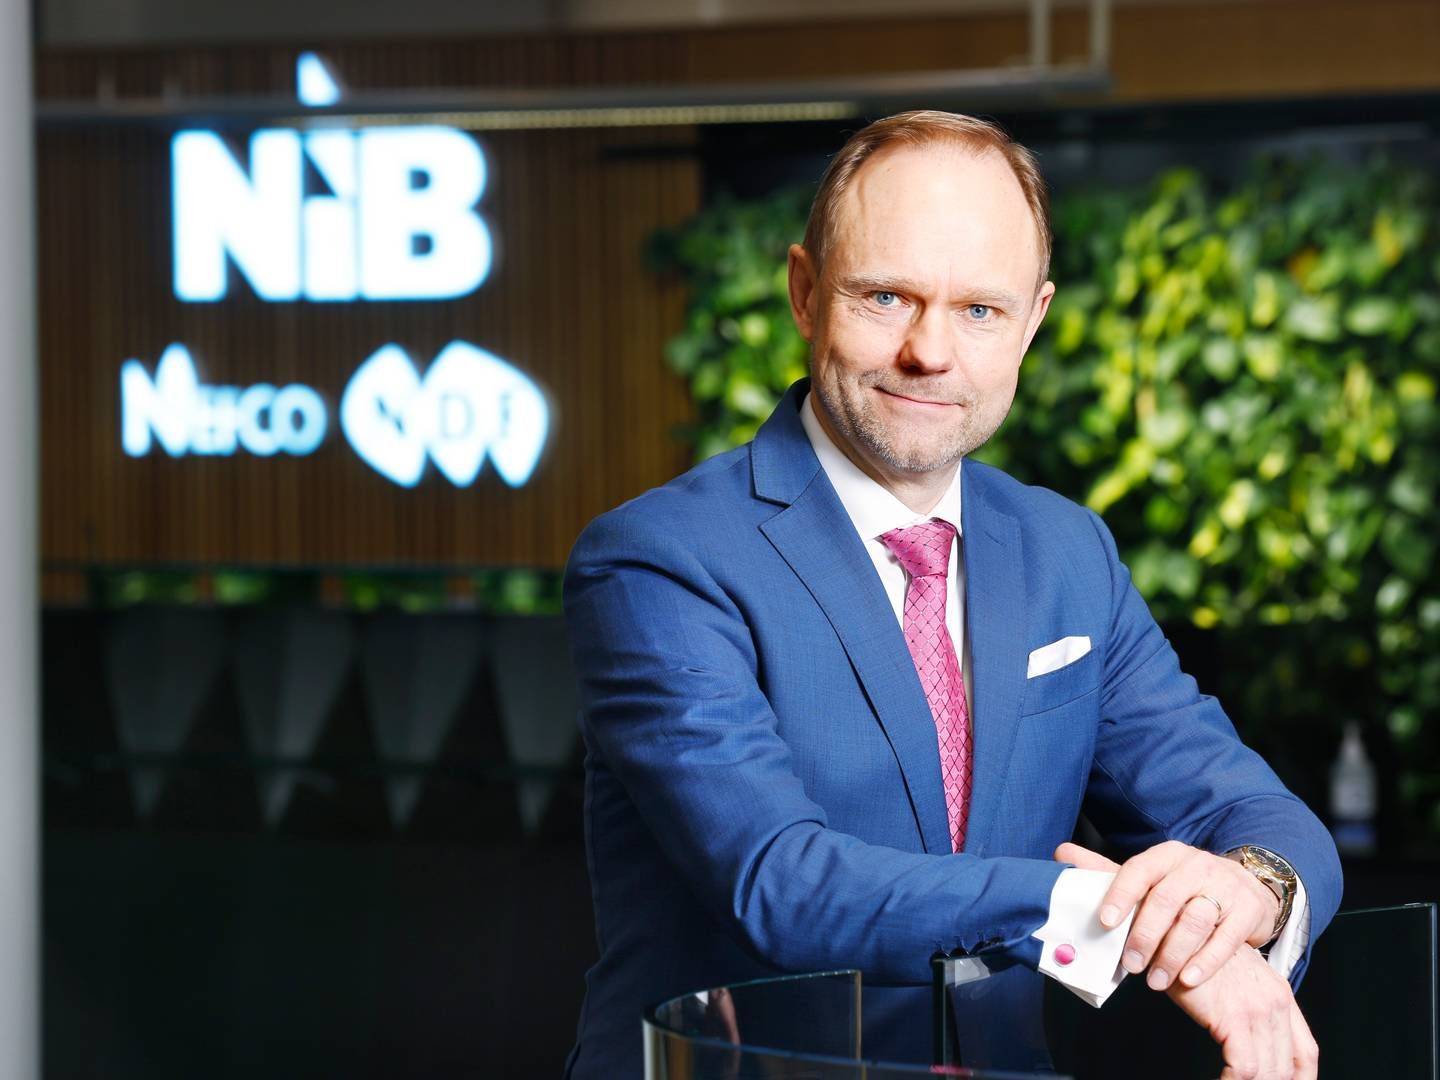 President and CEO of Nordic Investment Bank. | Photo: Marjo Koivumäki / Nib